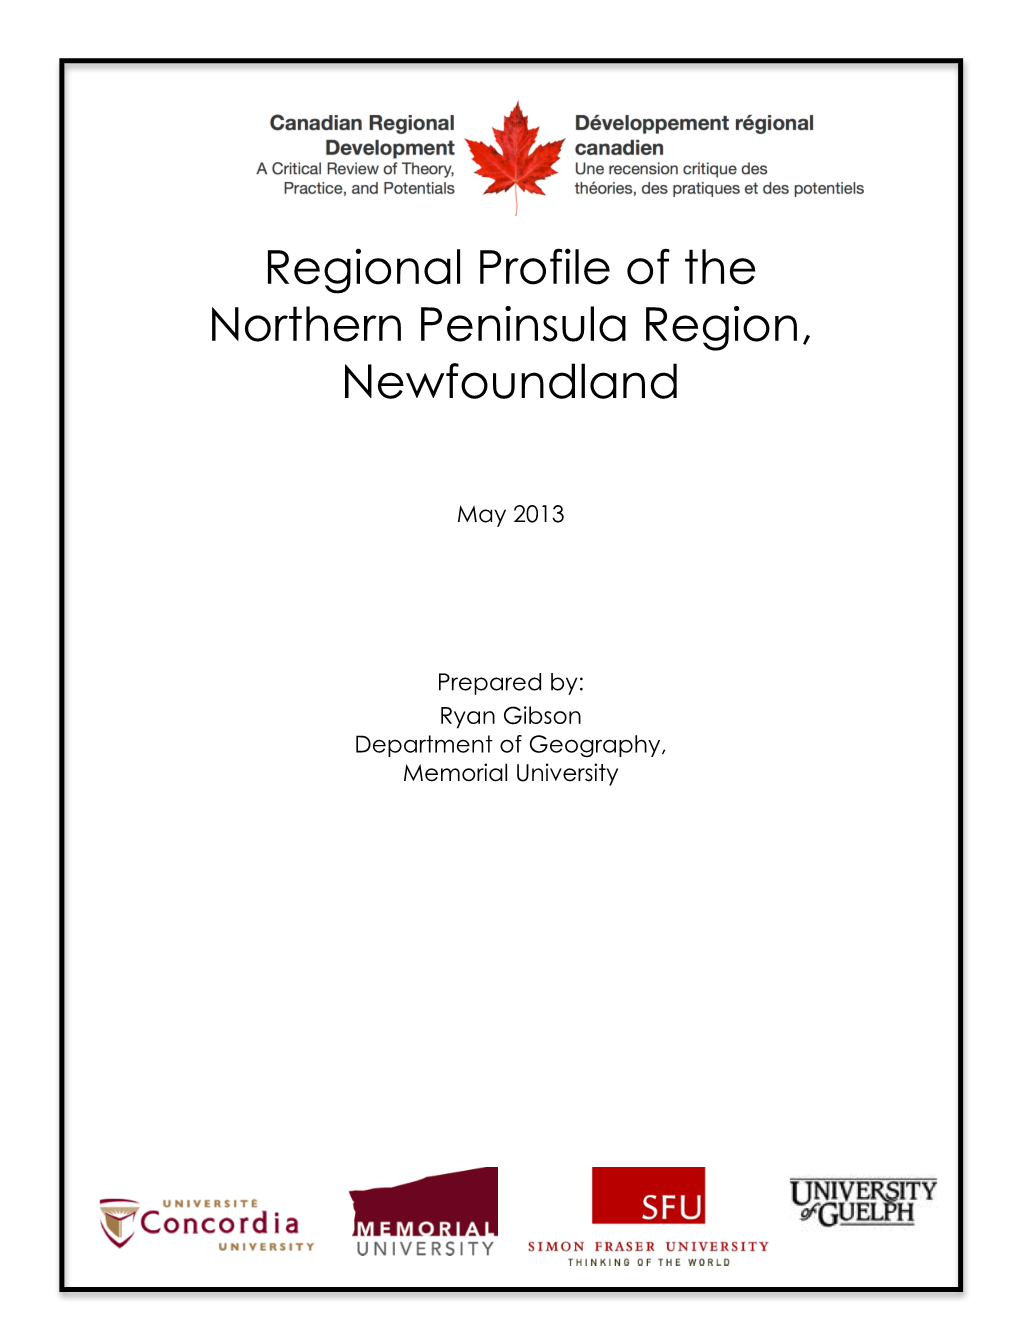 Northern Peninsula Region, Newfoundland